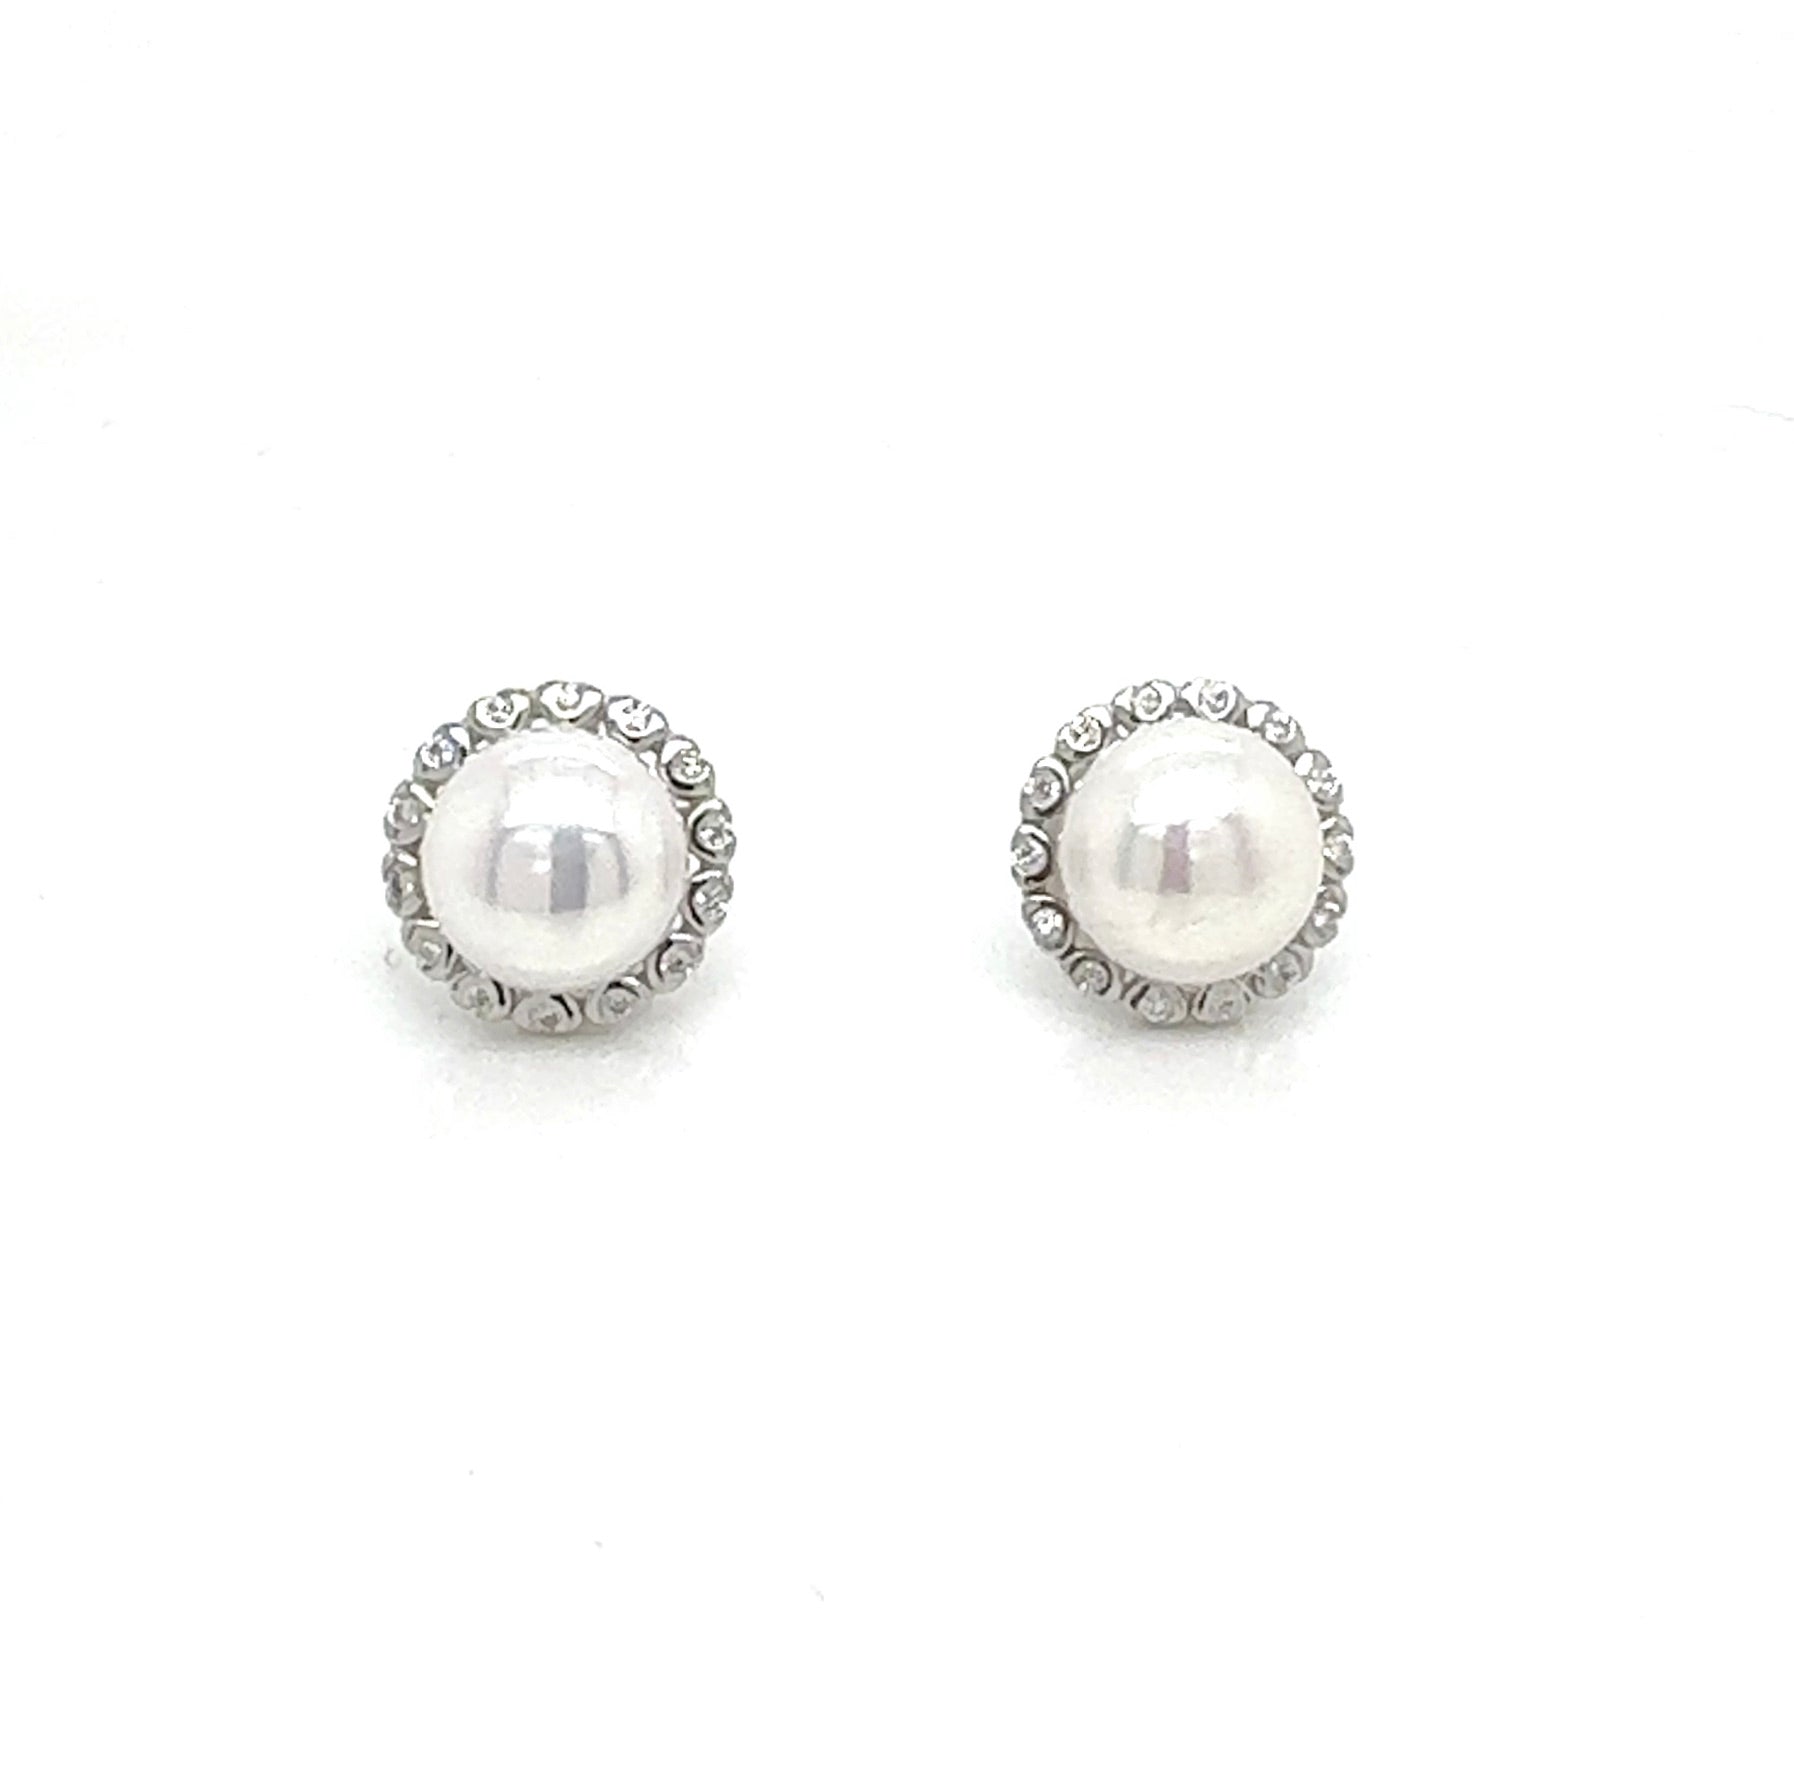 Equestrian style pearl earrings